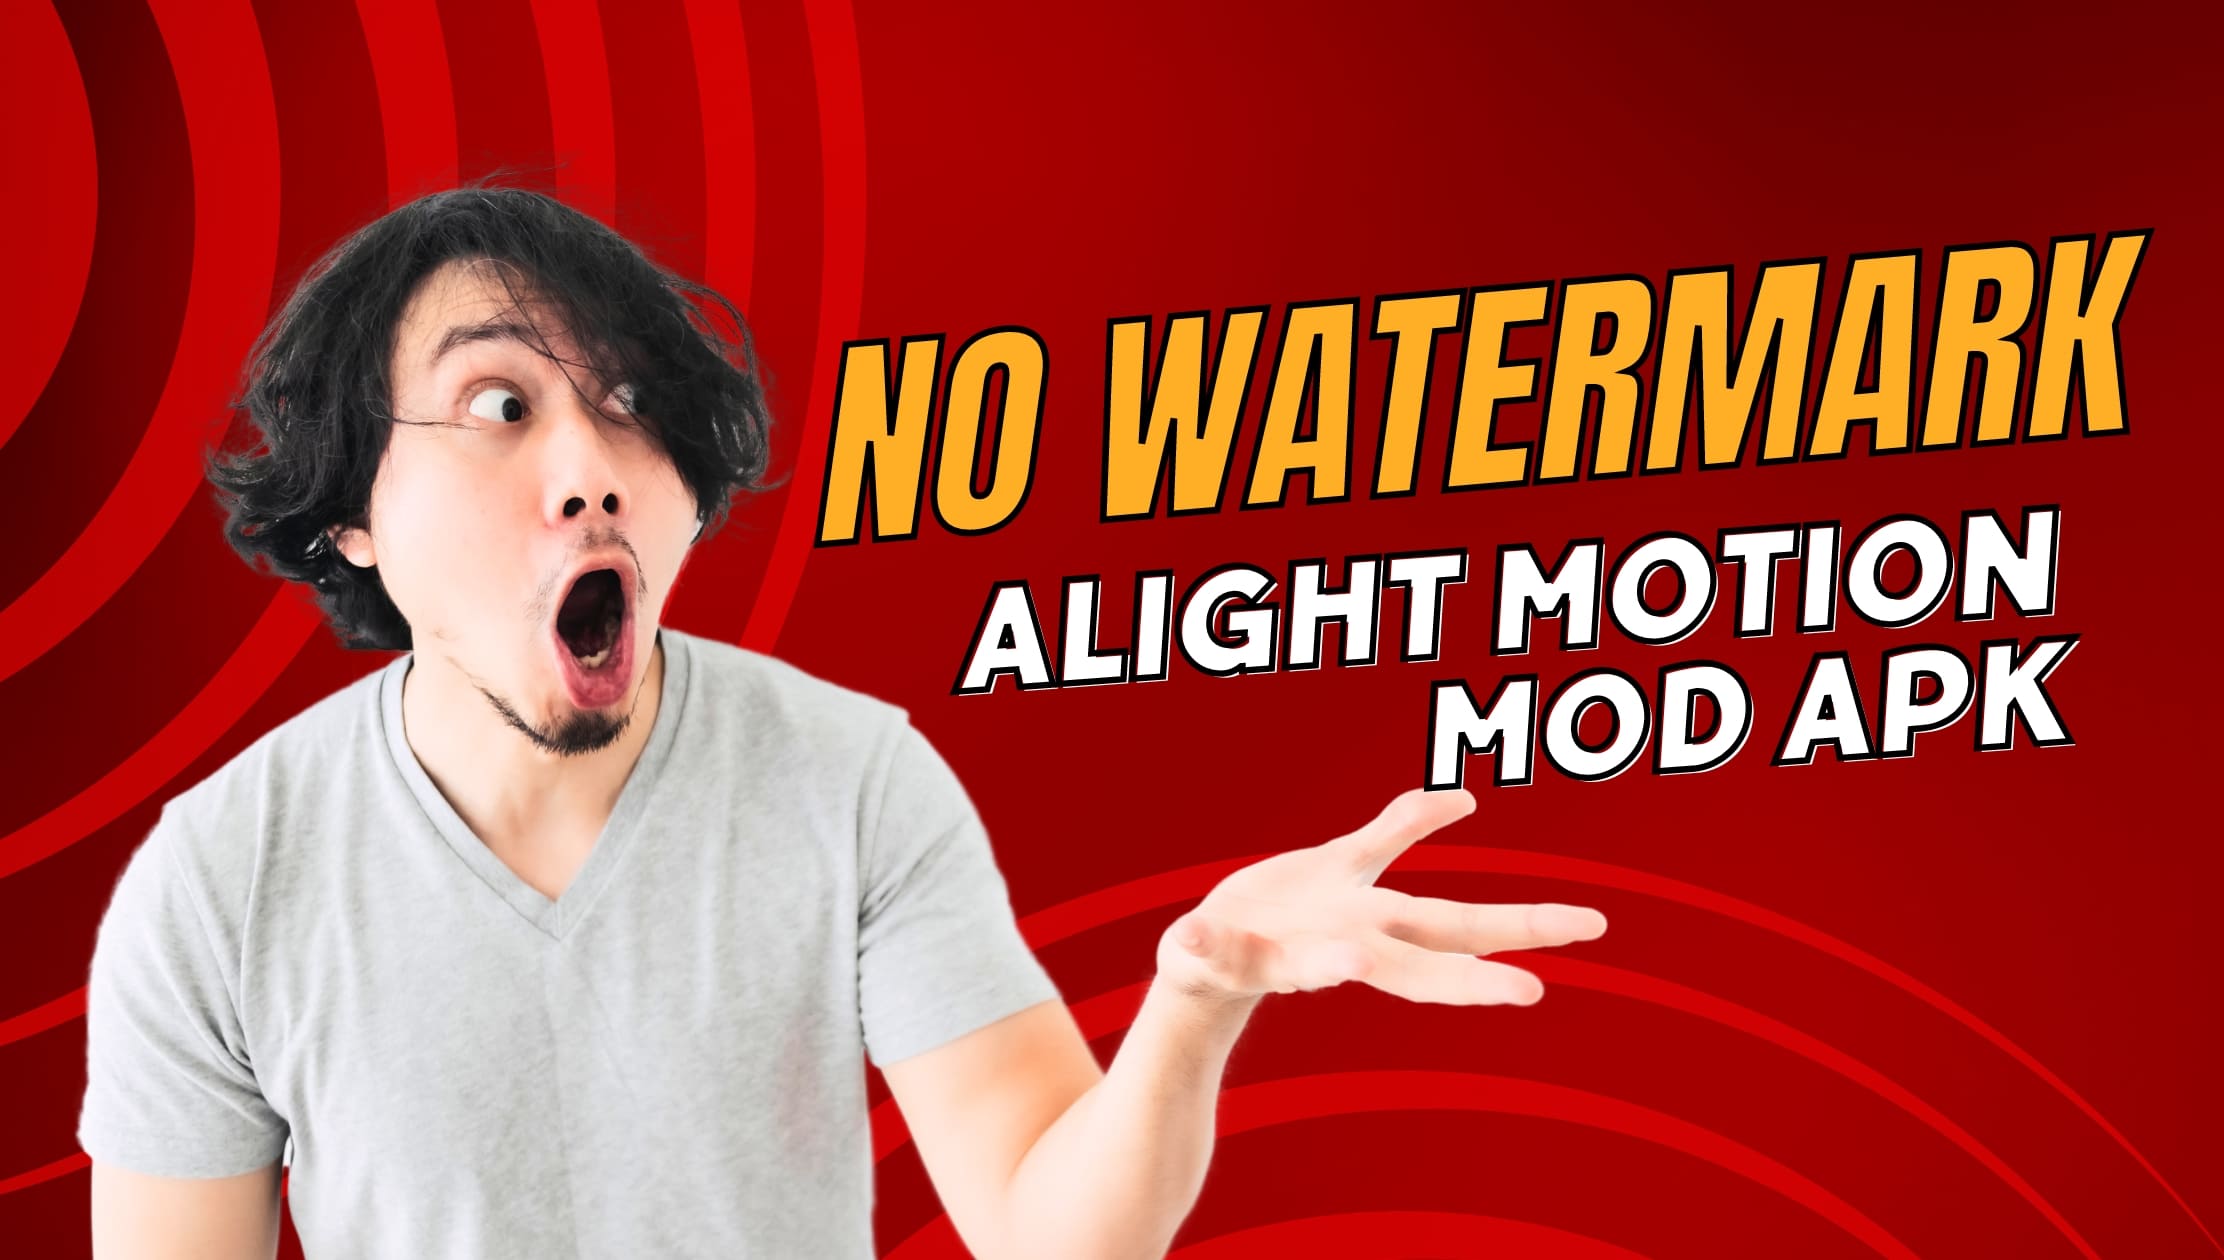 No watermark in Alight Motion Mod Apk